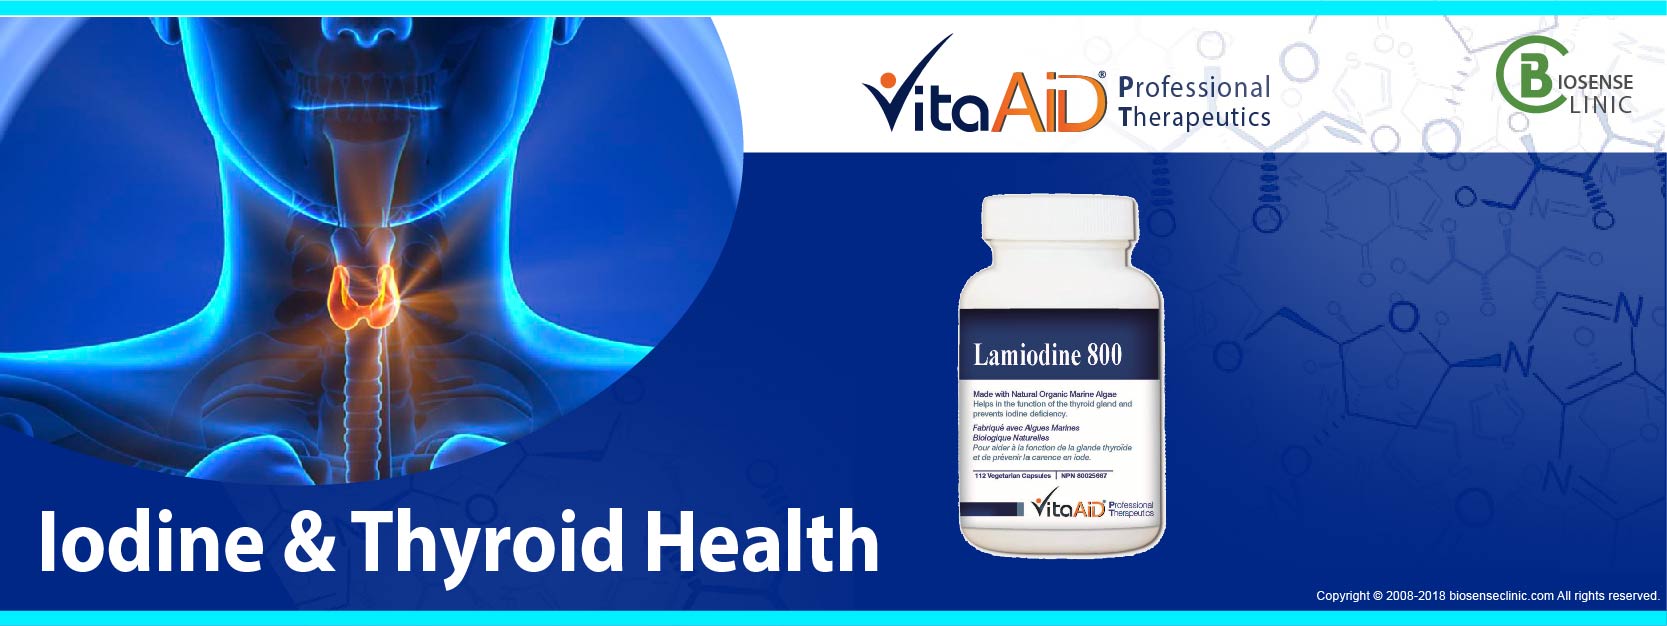 VitaAid category banner Iodine & Thyroid Health